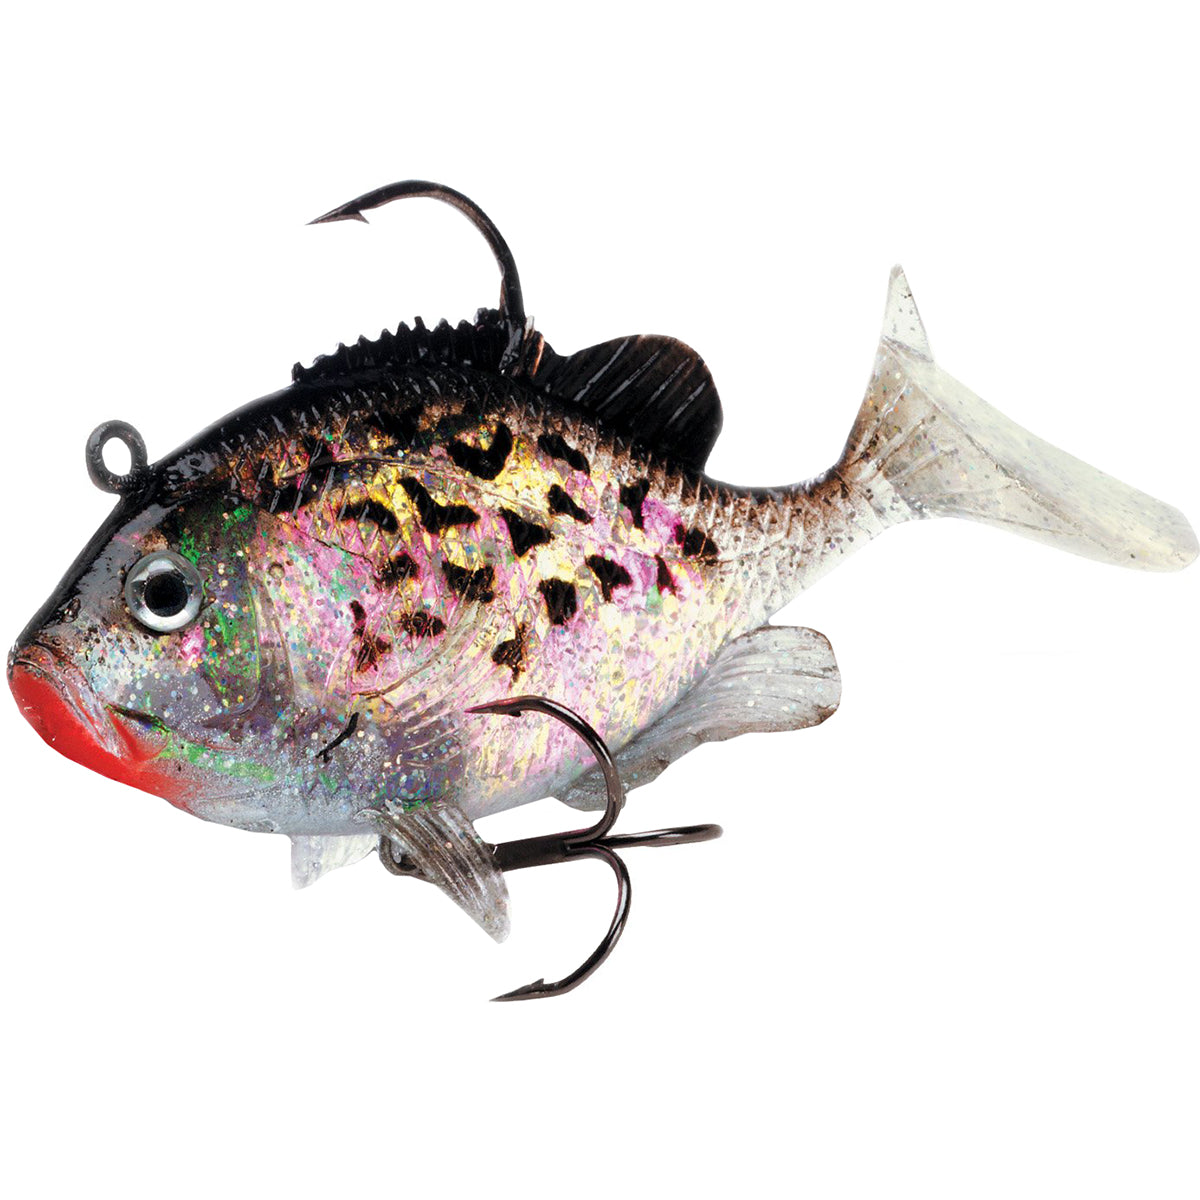 Storm WildEye Live Sunfish Fishing Lures, 5/16 Oz., 3”, Pack of 3 New